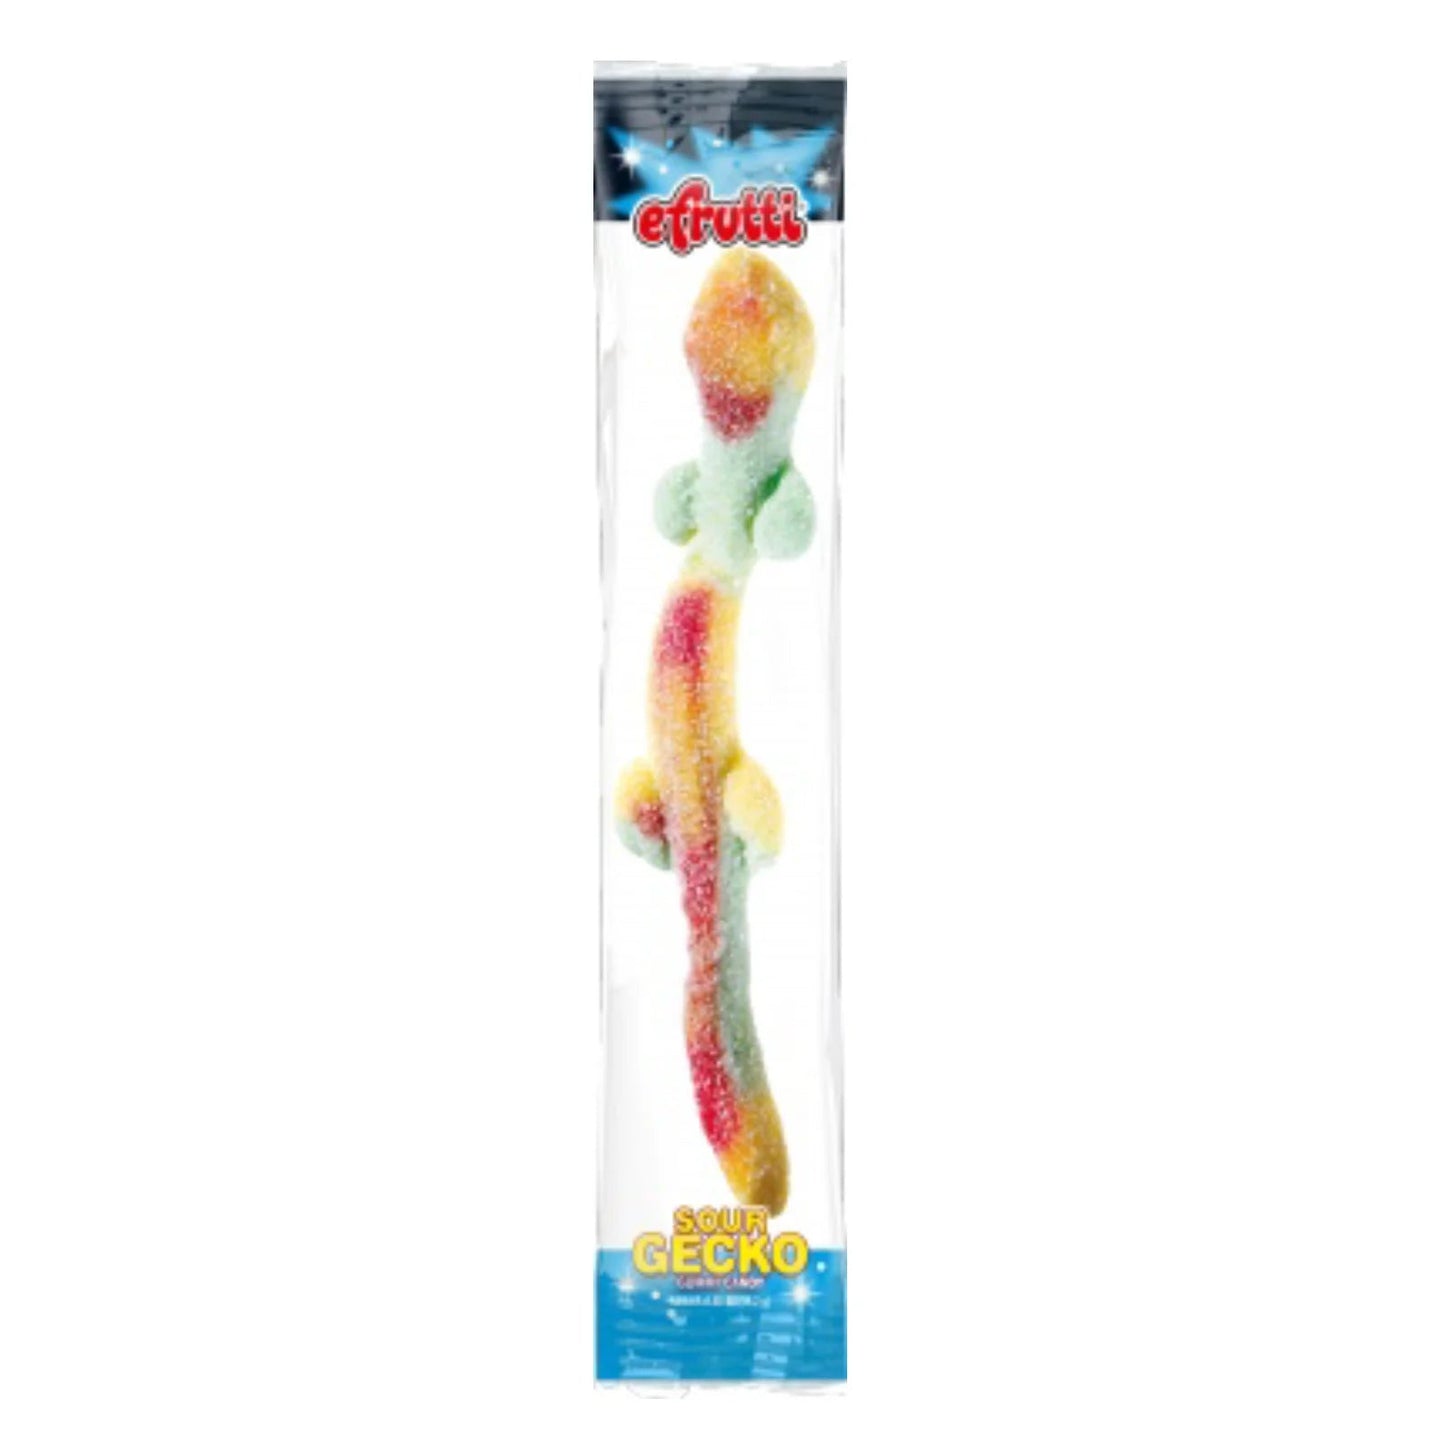 Efrutti Gecko 19g - Candy Mail UK